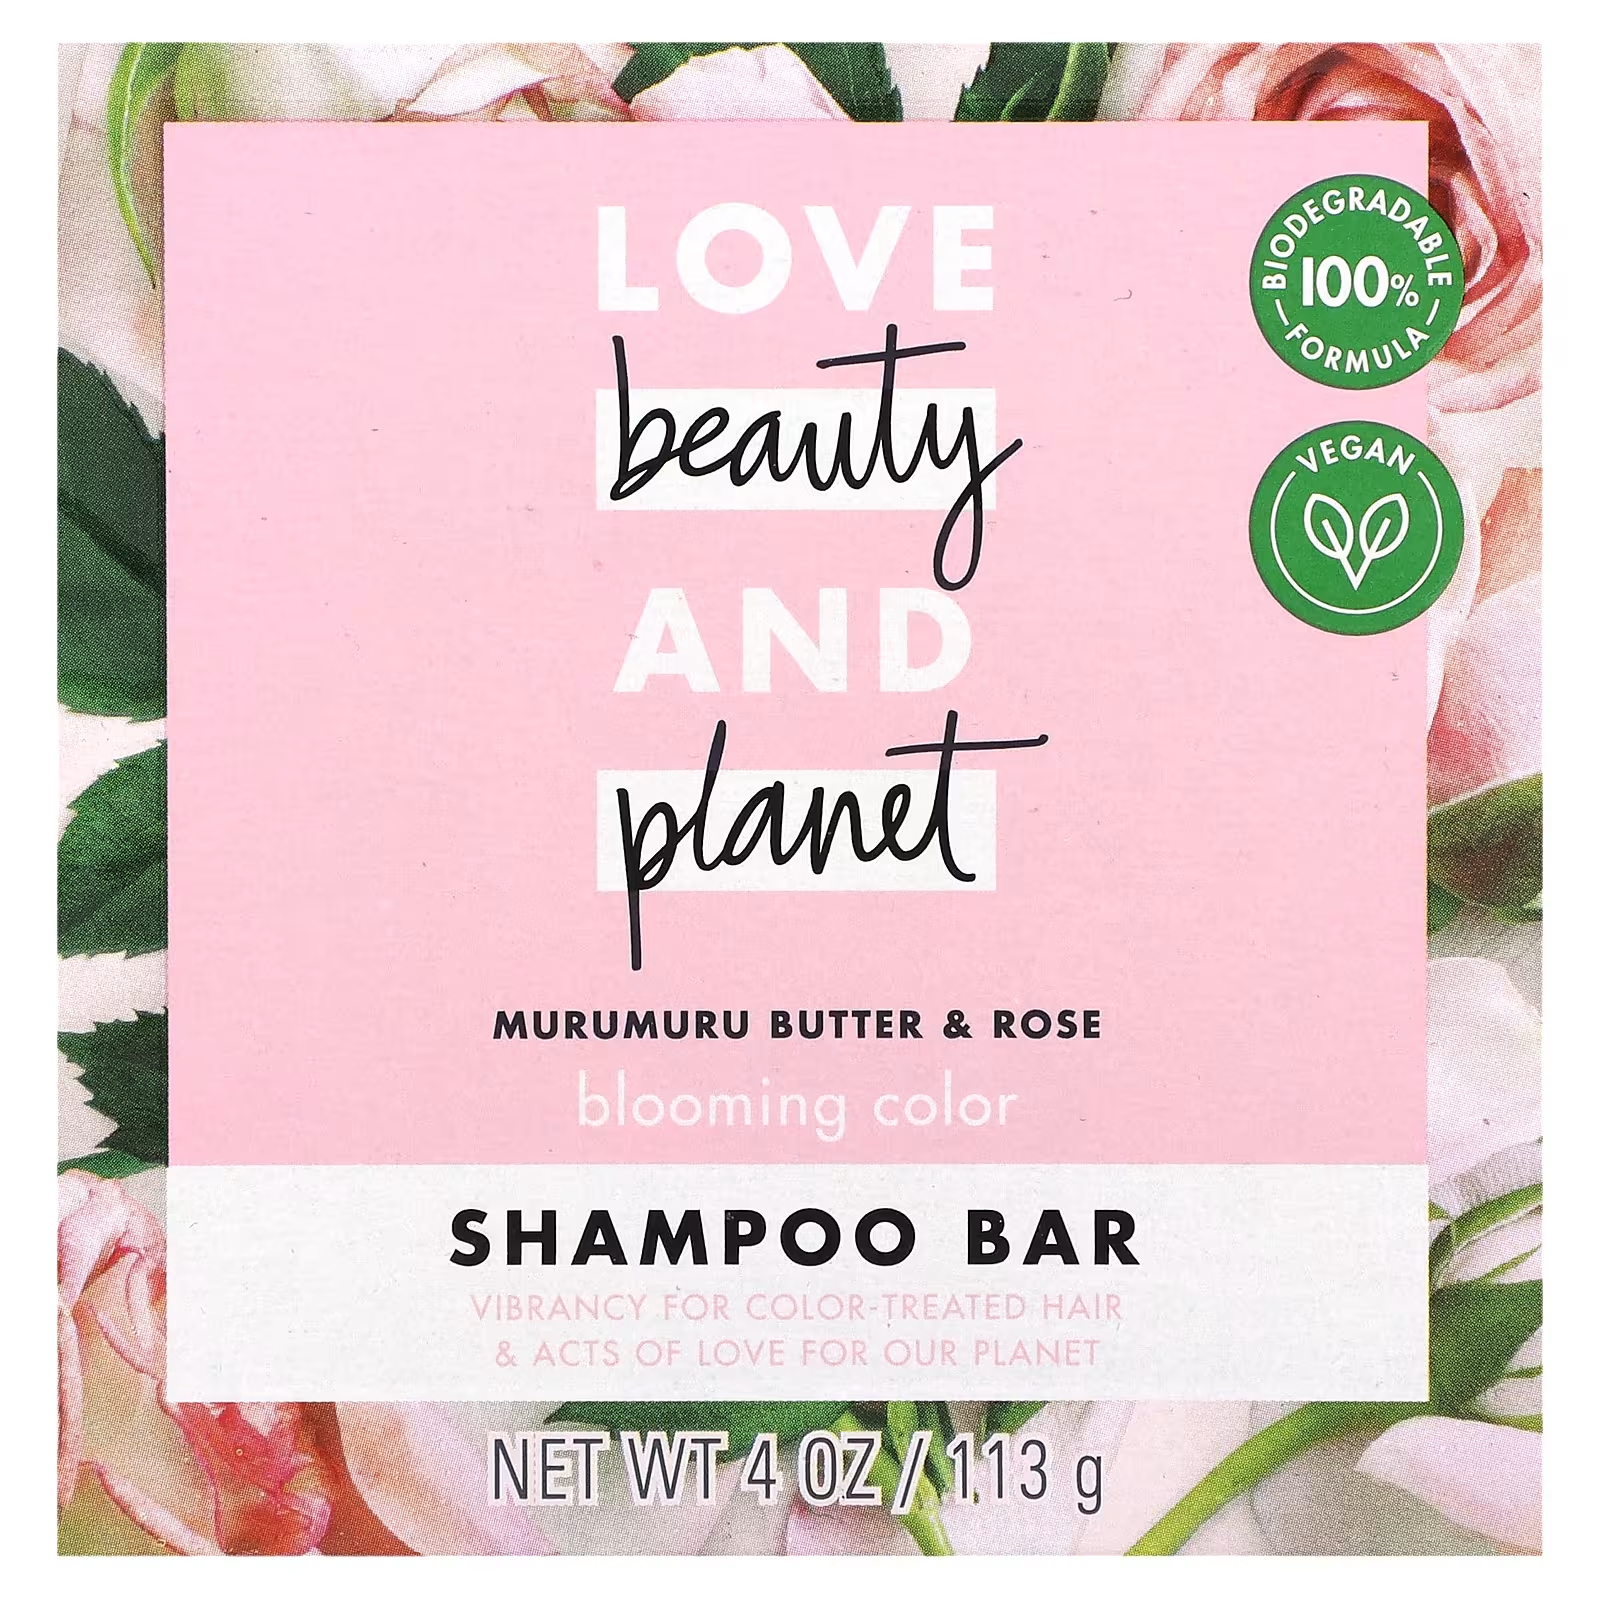 Шампунь Love Beauty and Planet Blooming Color Murumuru Butter & Rose floresan натуральное кокосовое масло 300 мл